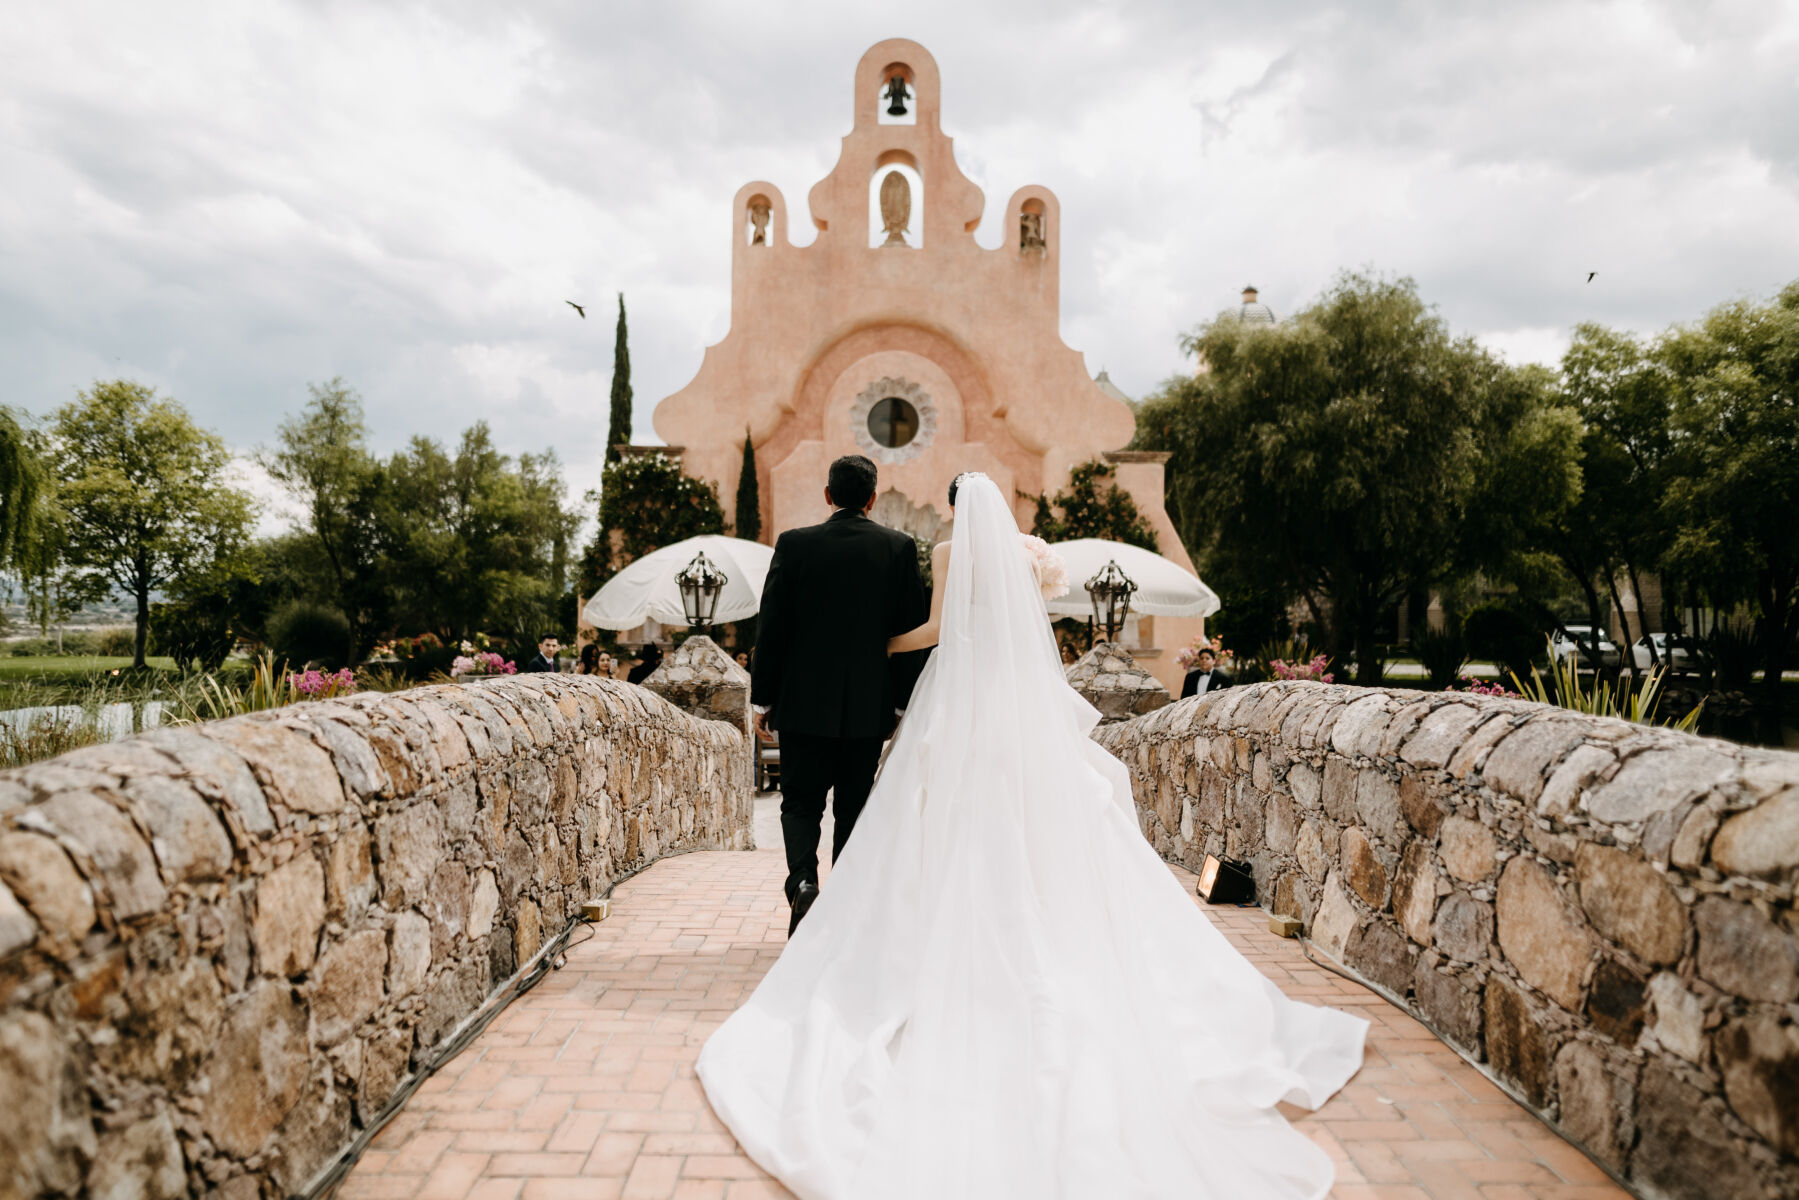 Mexican wedding: couple walking across stone bride to adobe style church